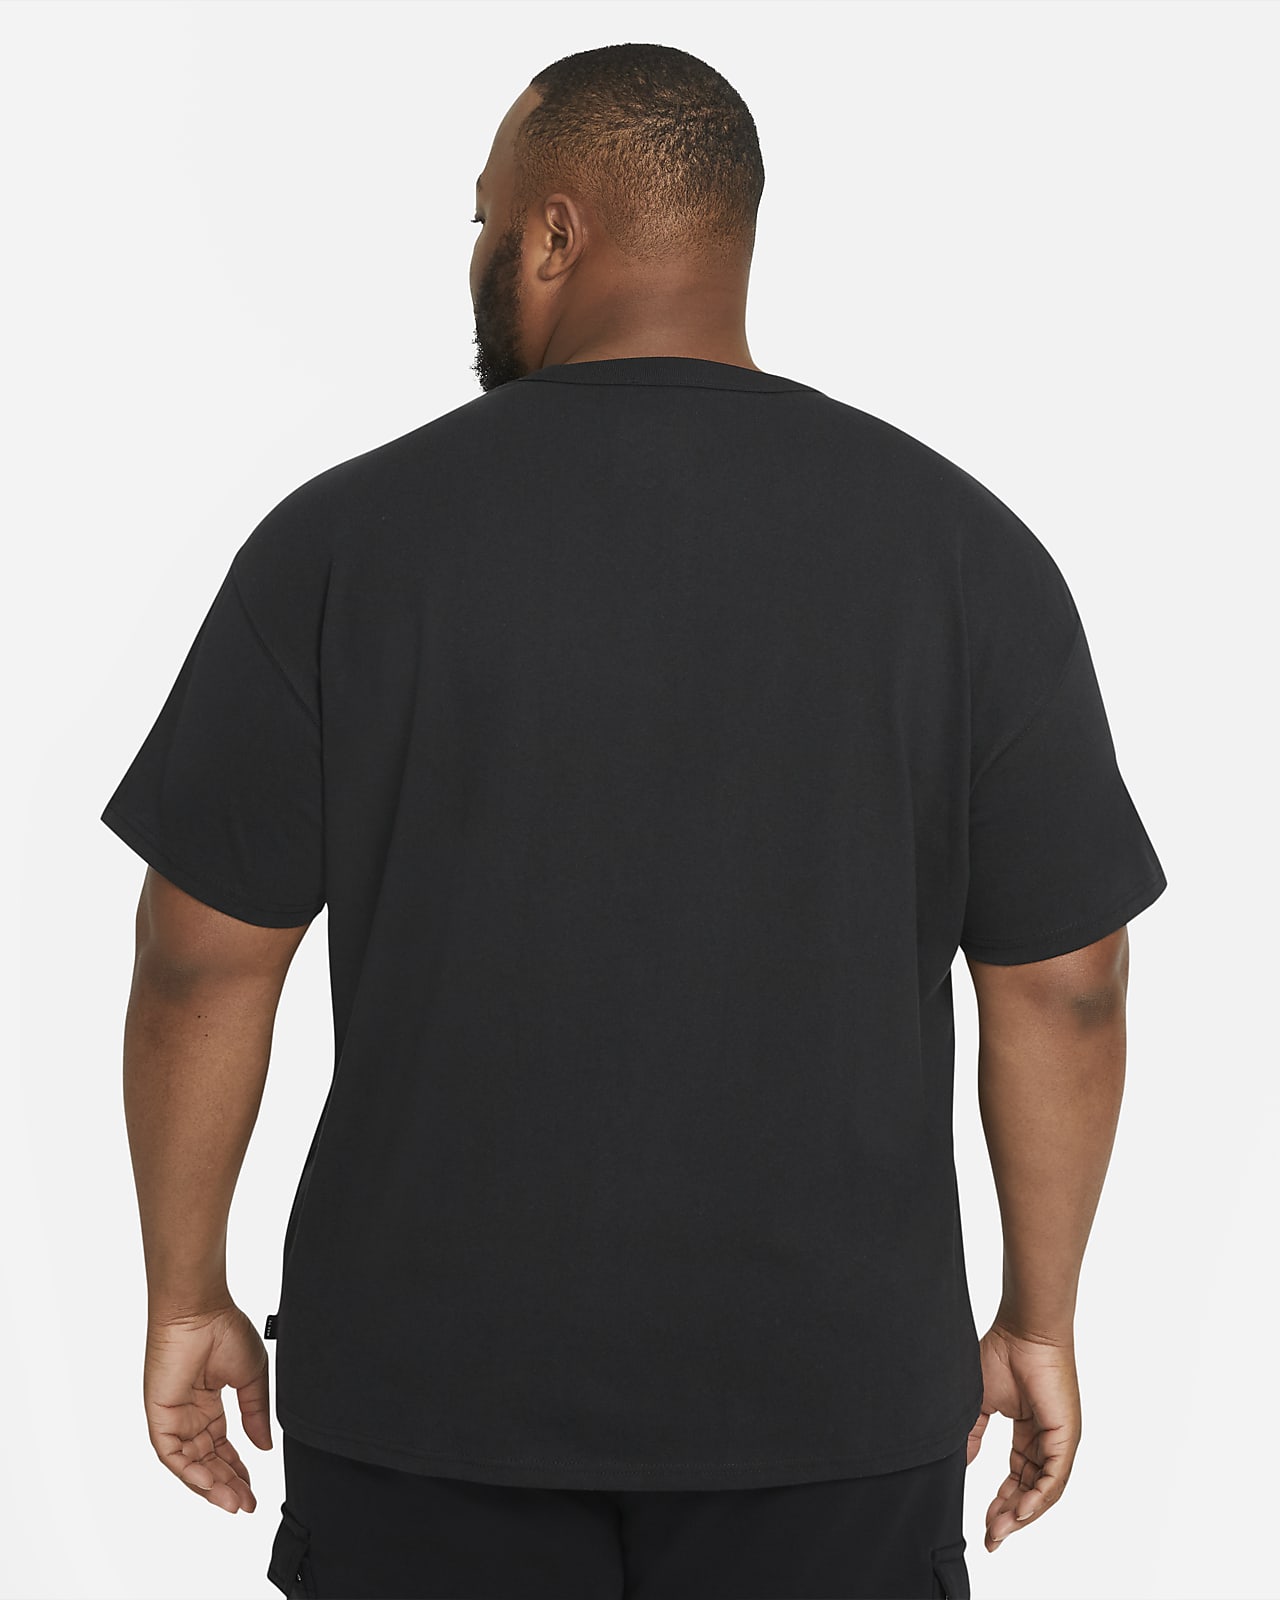 nike oversized black t shirt